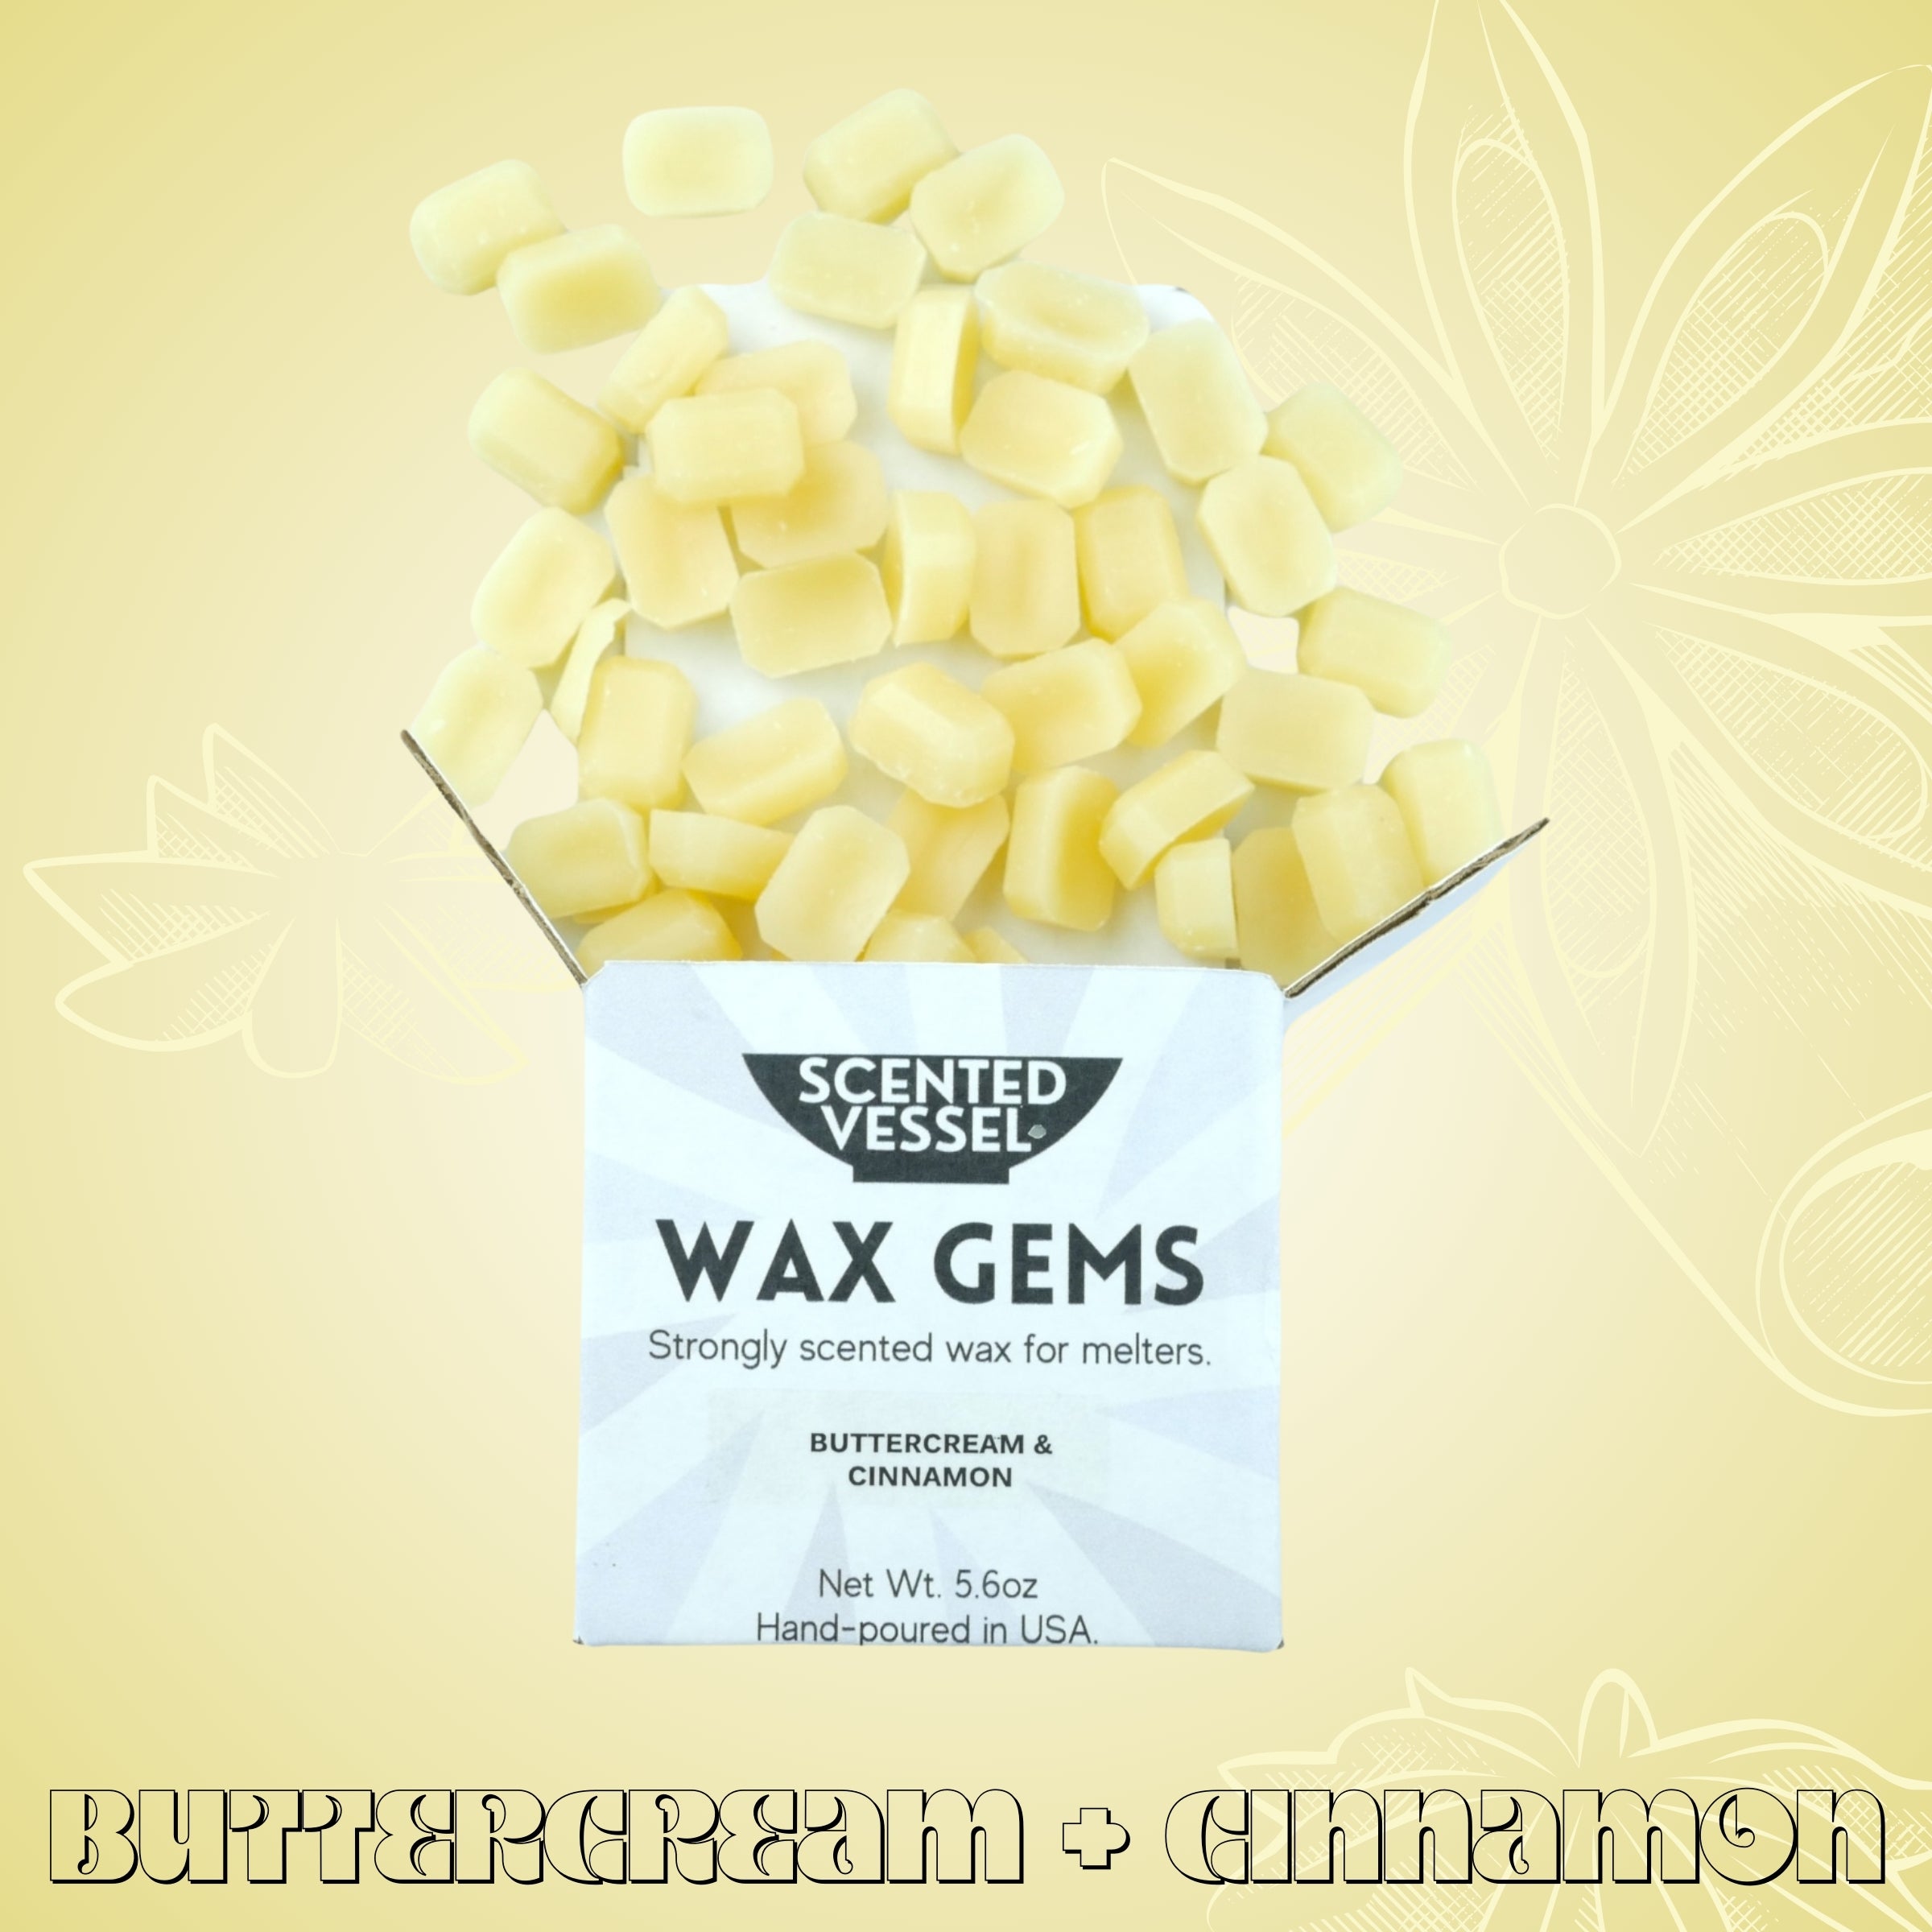 Buttercream & Cinnamon 5.6oz Wax Gems by Scented Vessel